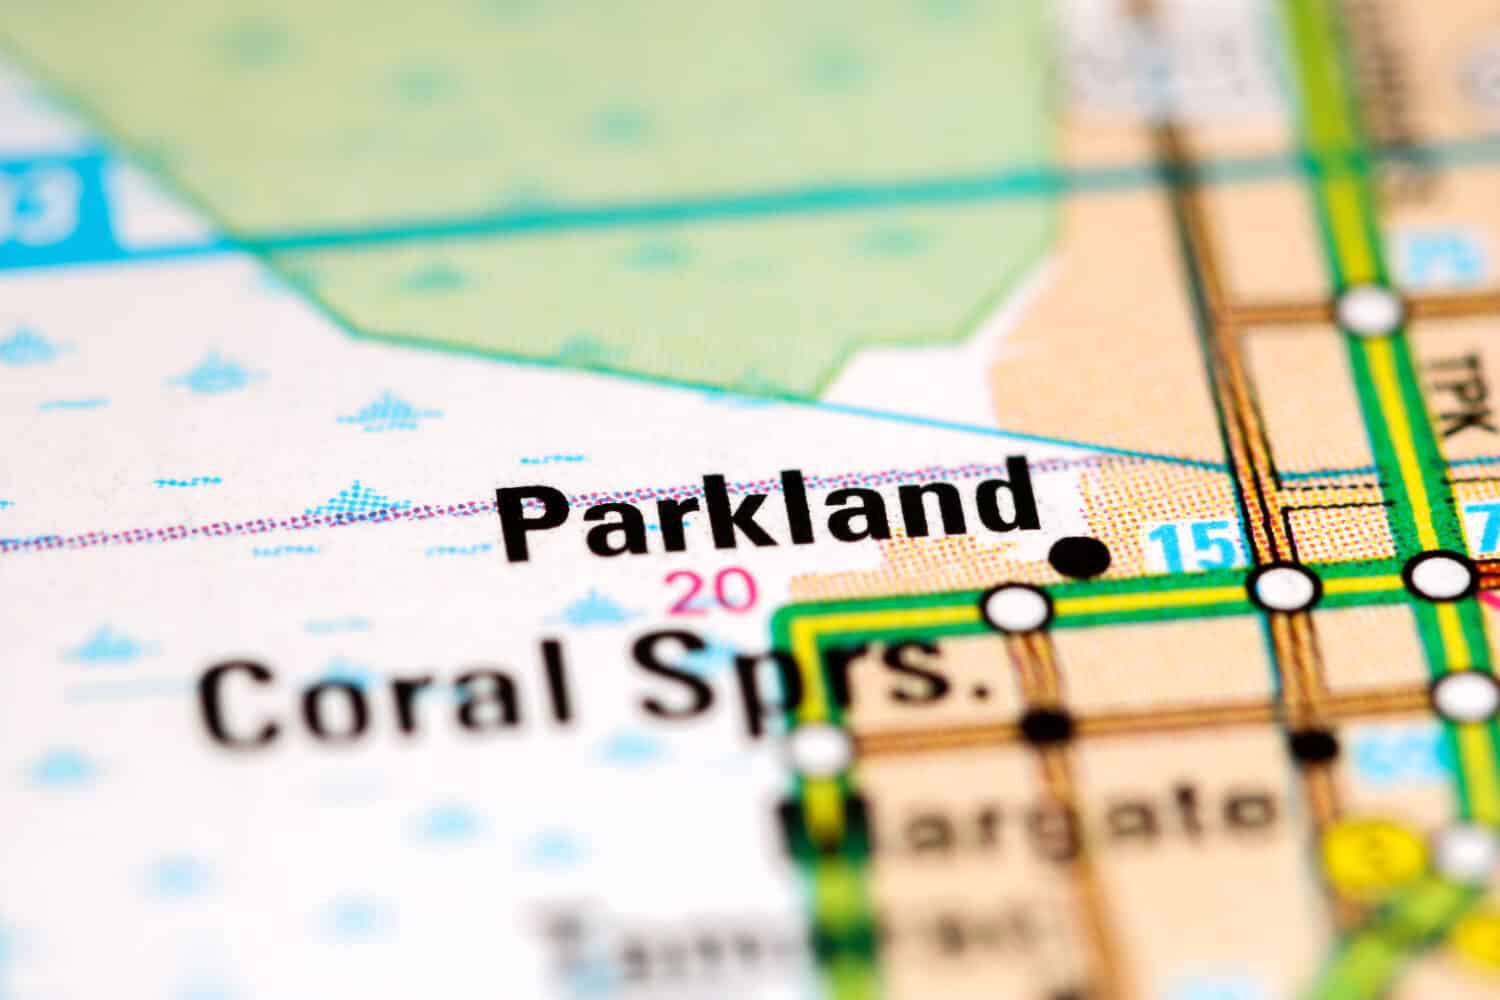 Parkland. Florida. USA on a map